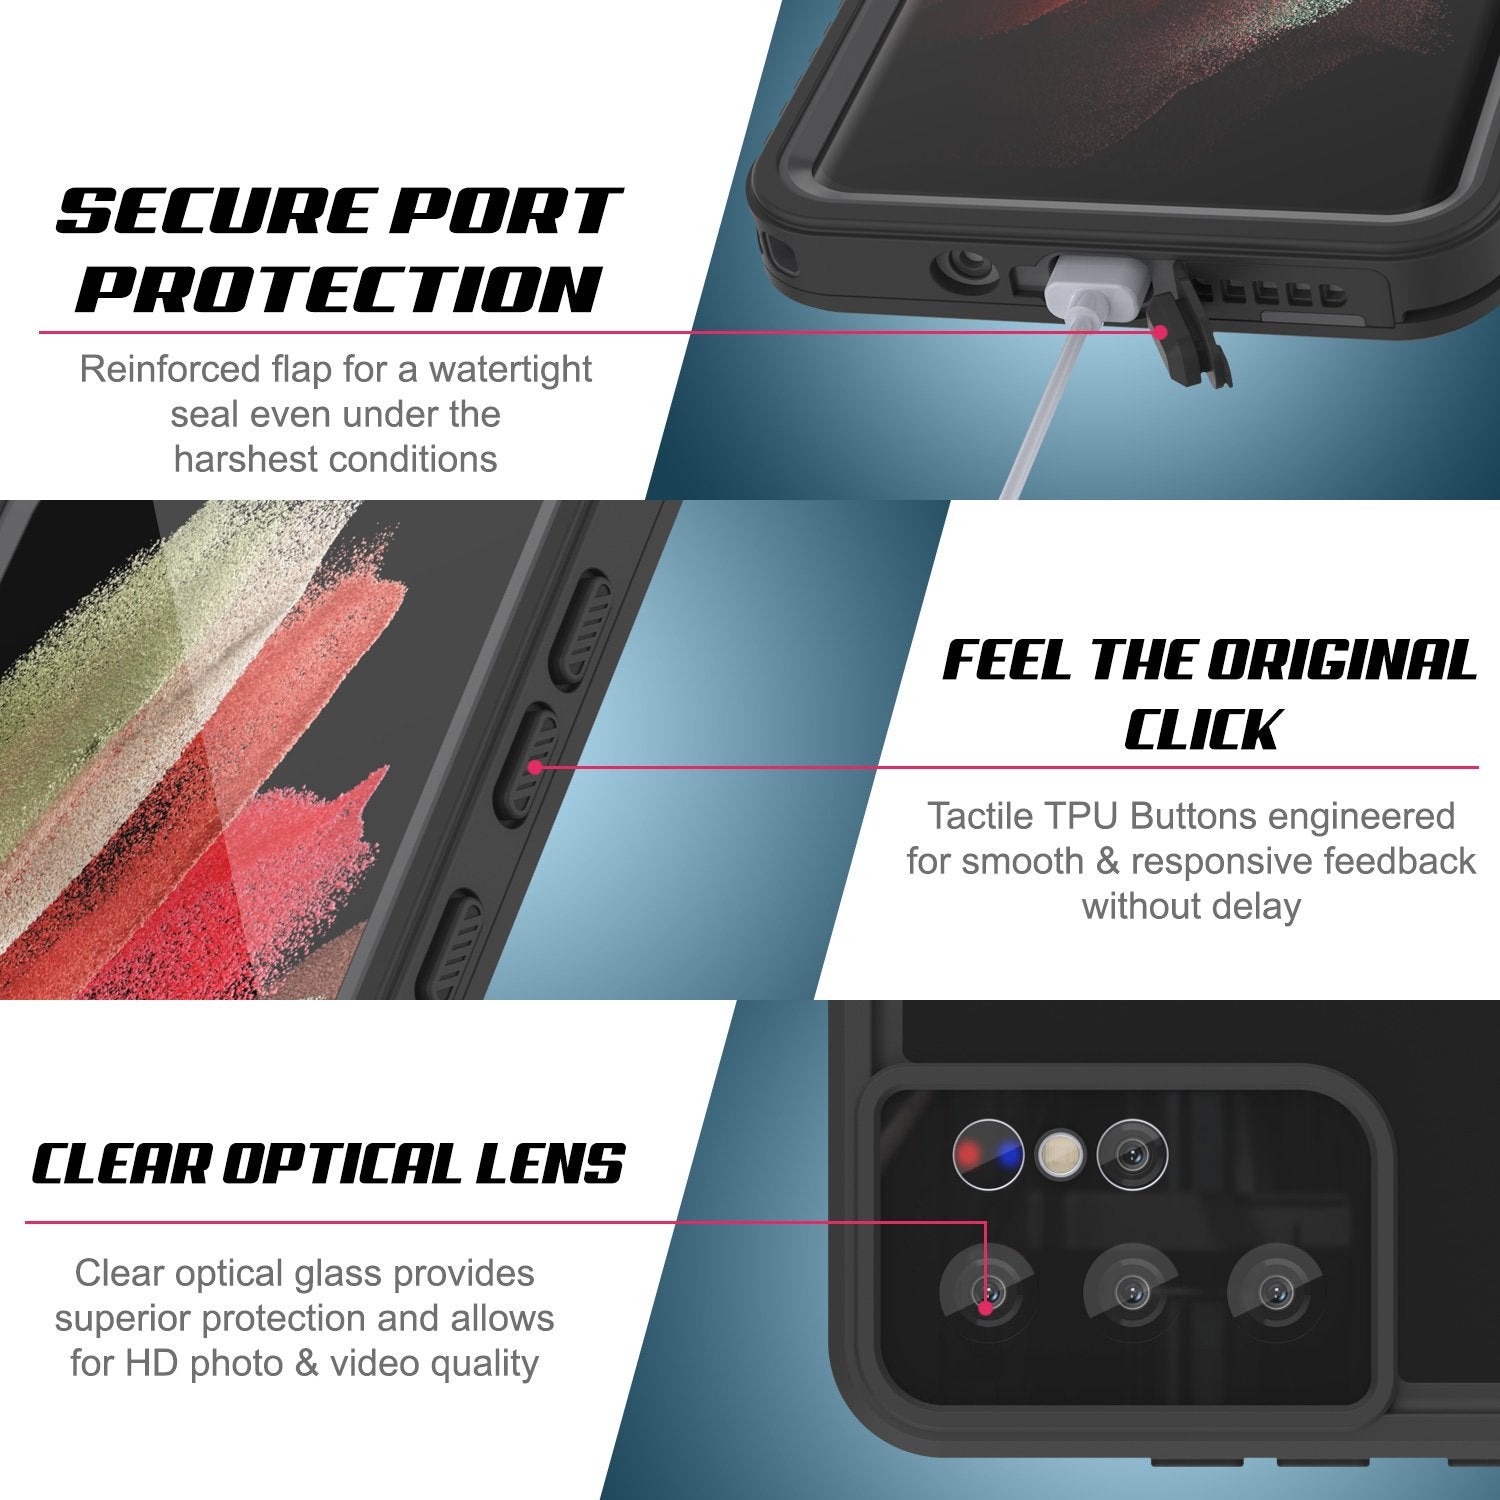 Galaxy S21 Ultra Waterproof Case PunkCase StudStar Pink Thin 6.6ft Underwater IP68 Shock/Snow Proof